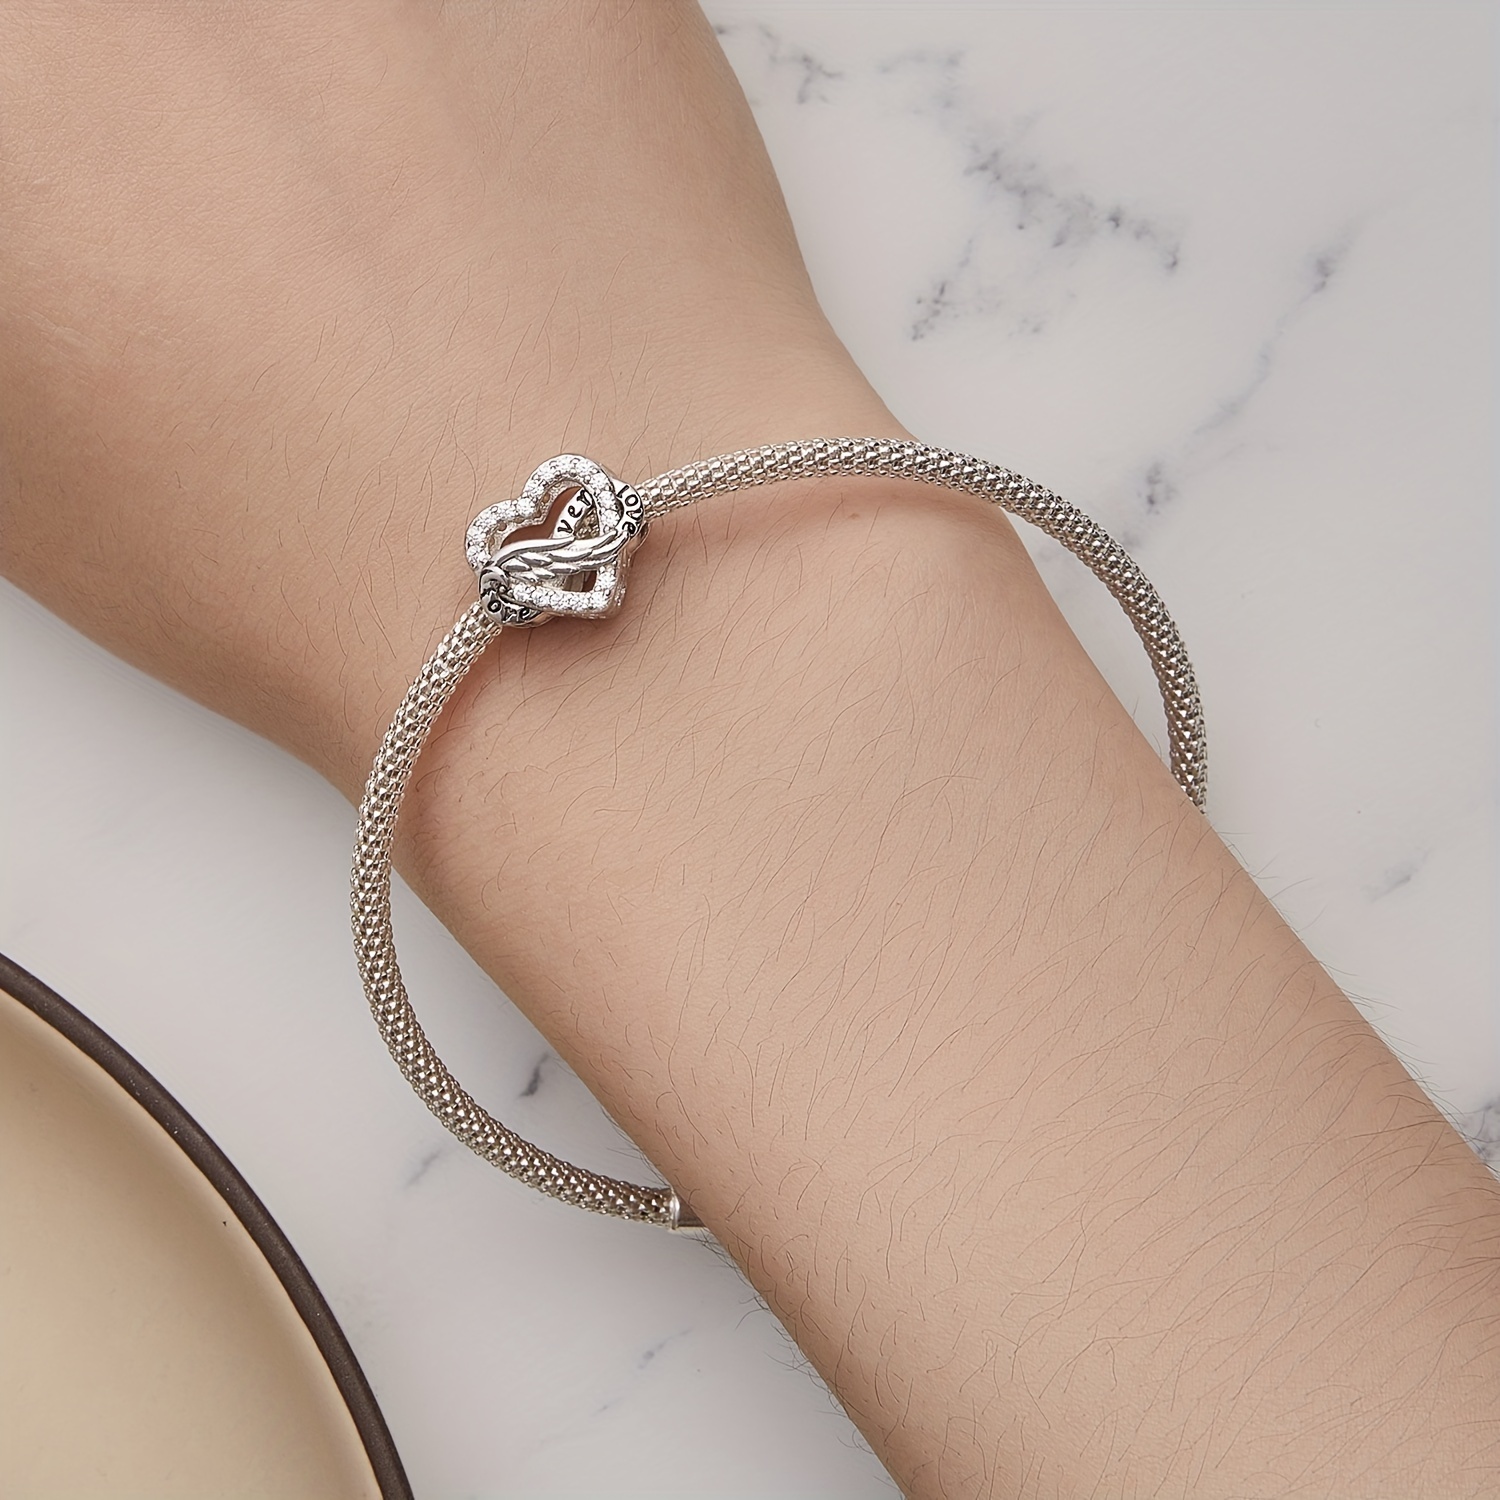 1pc Heart-shaped Full Rhinestone Design Sterling Silver Bracelet